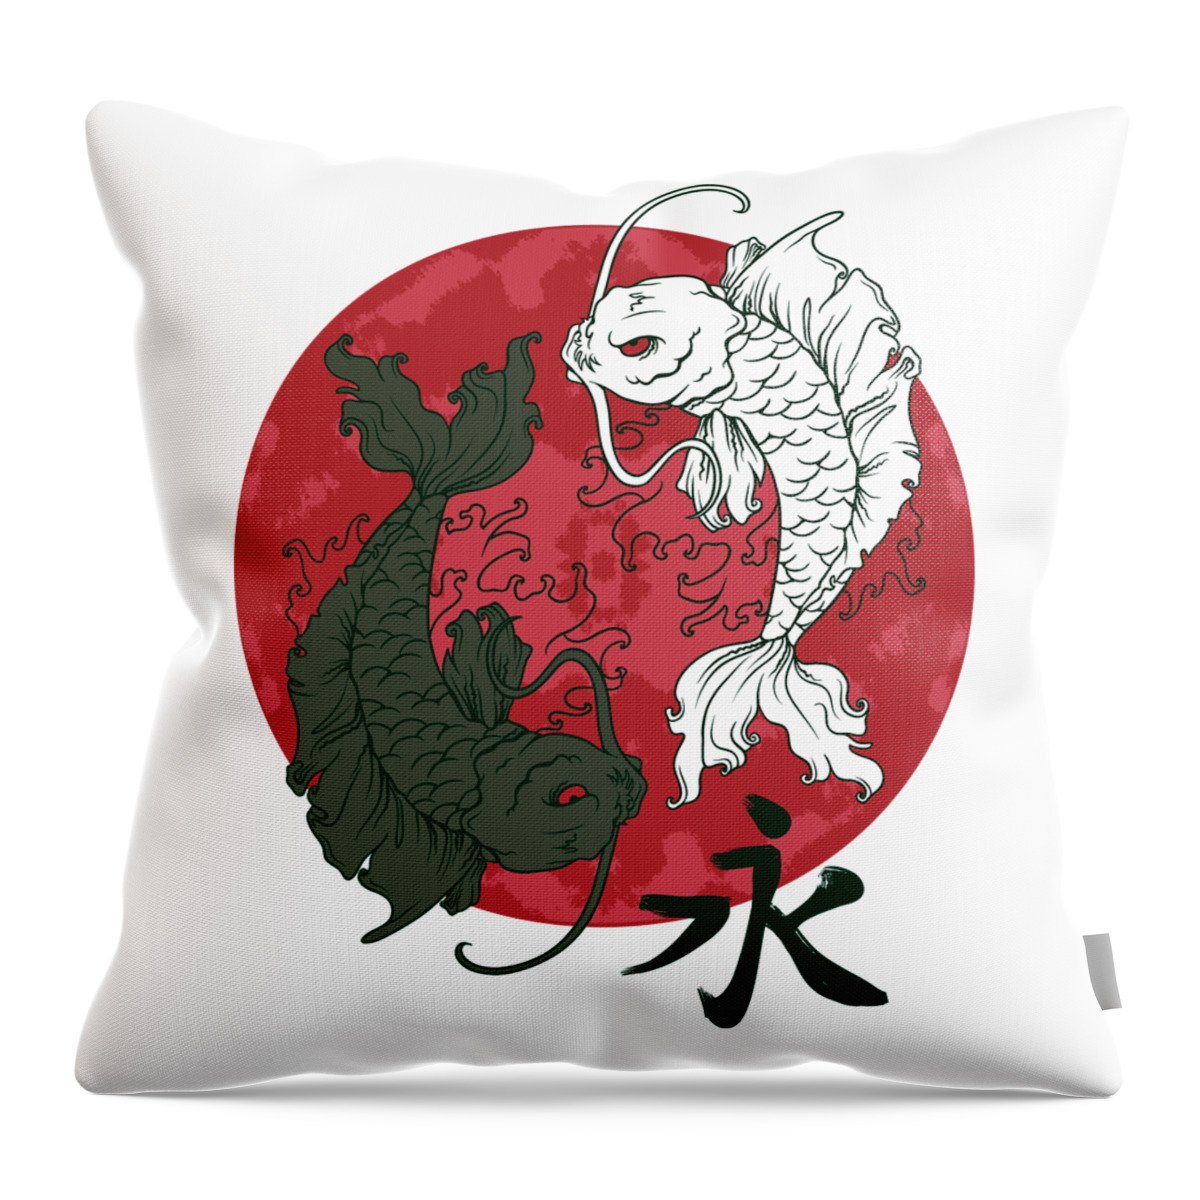 Koi Fish Throw Pillow featuring the digital art Yin Yang Koi Fish by Jacob Zelazny